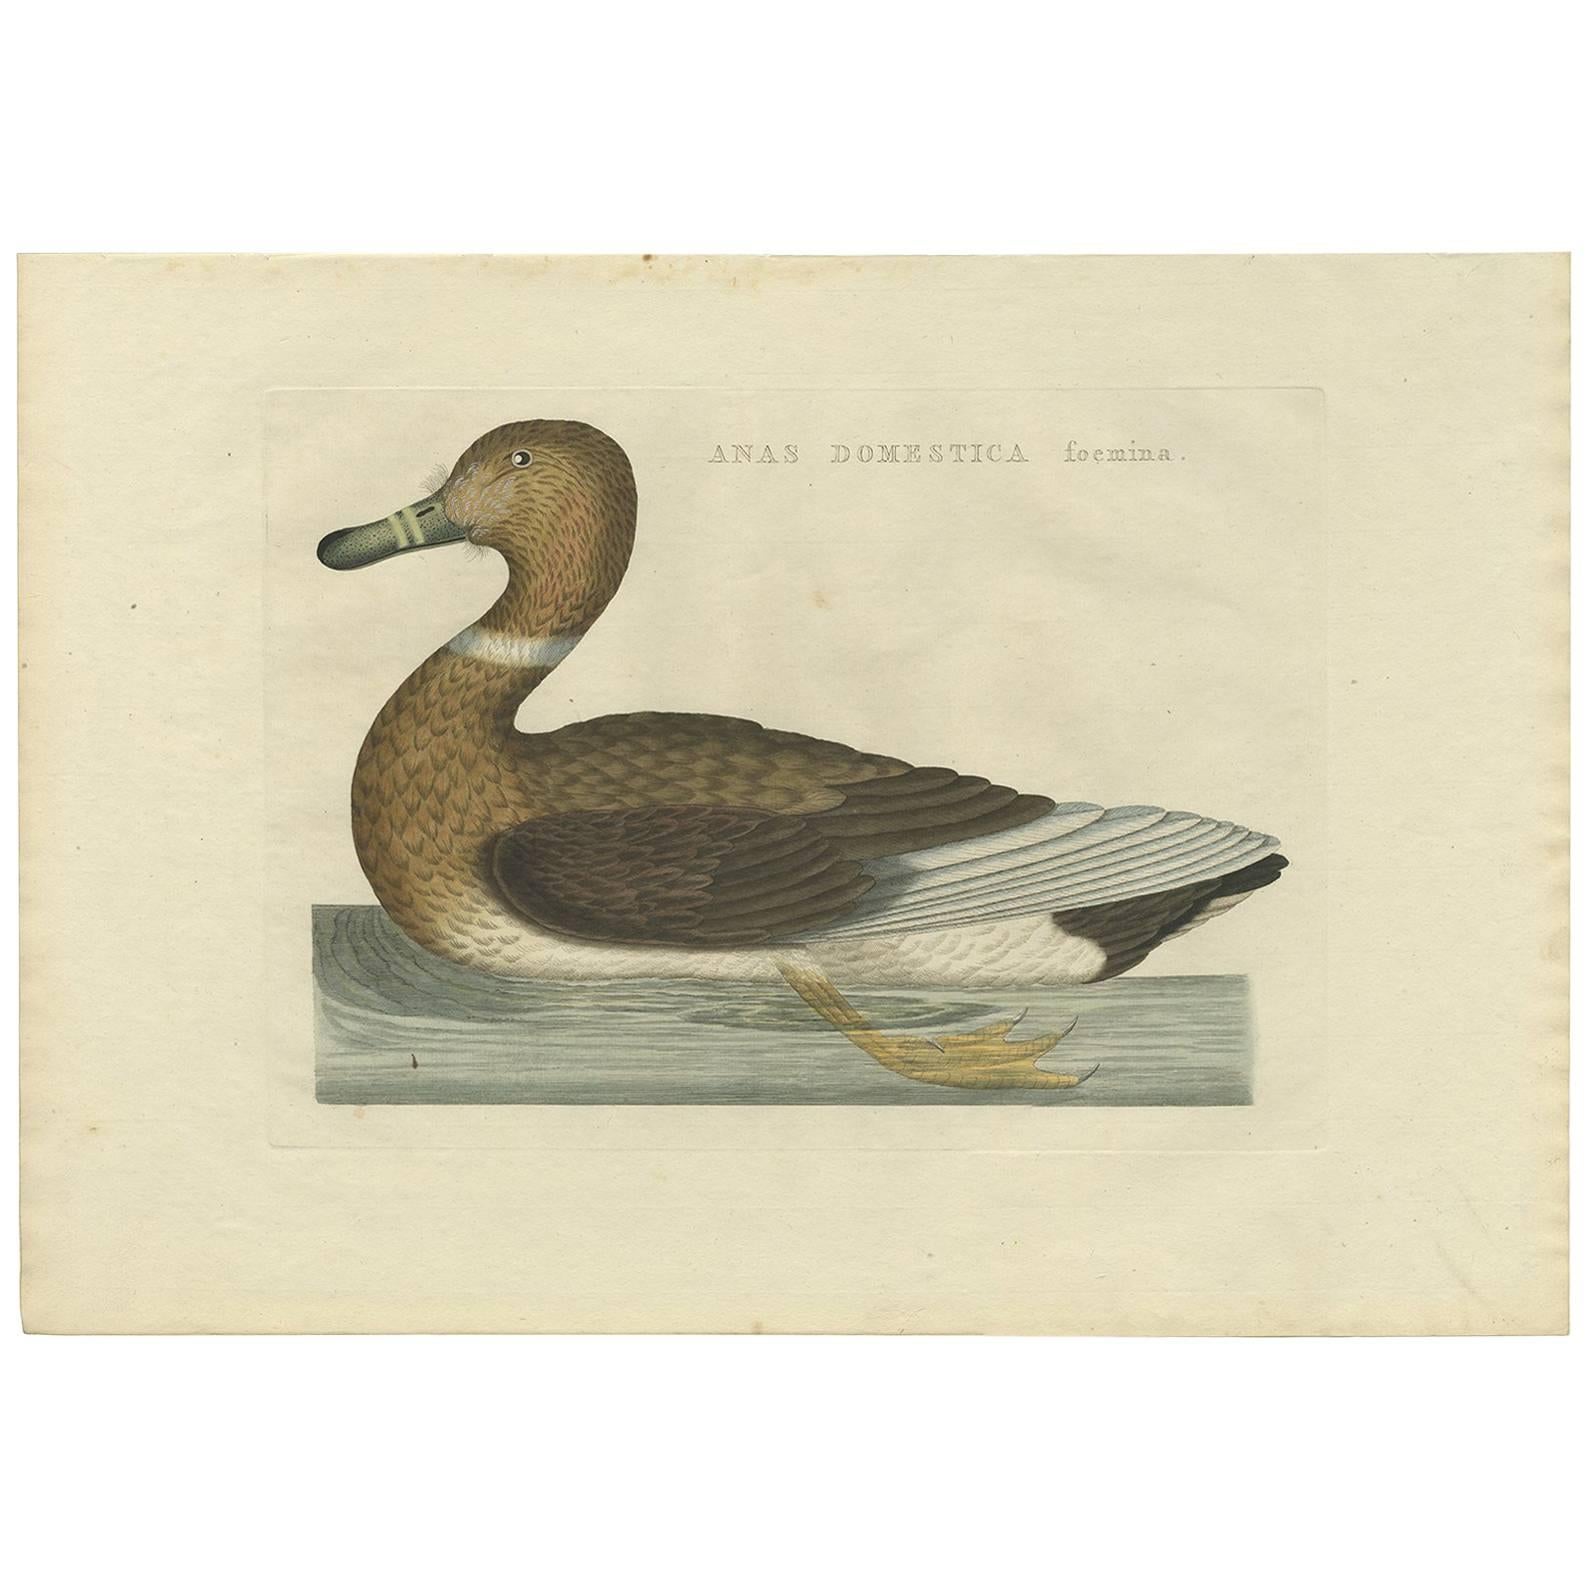 Antique Bird Print of the Domestic Duck by Sepp & Nozeman, 1809